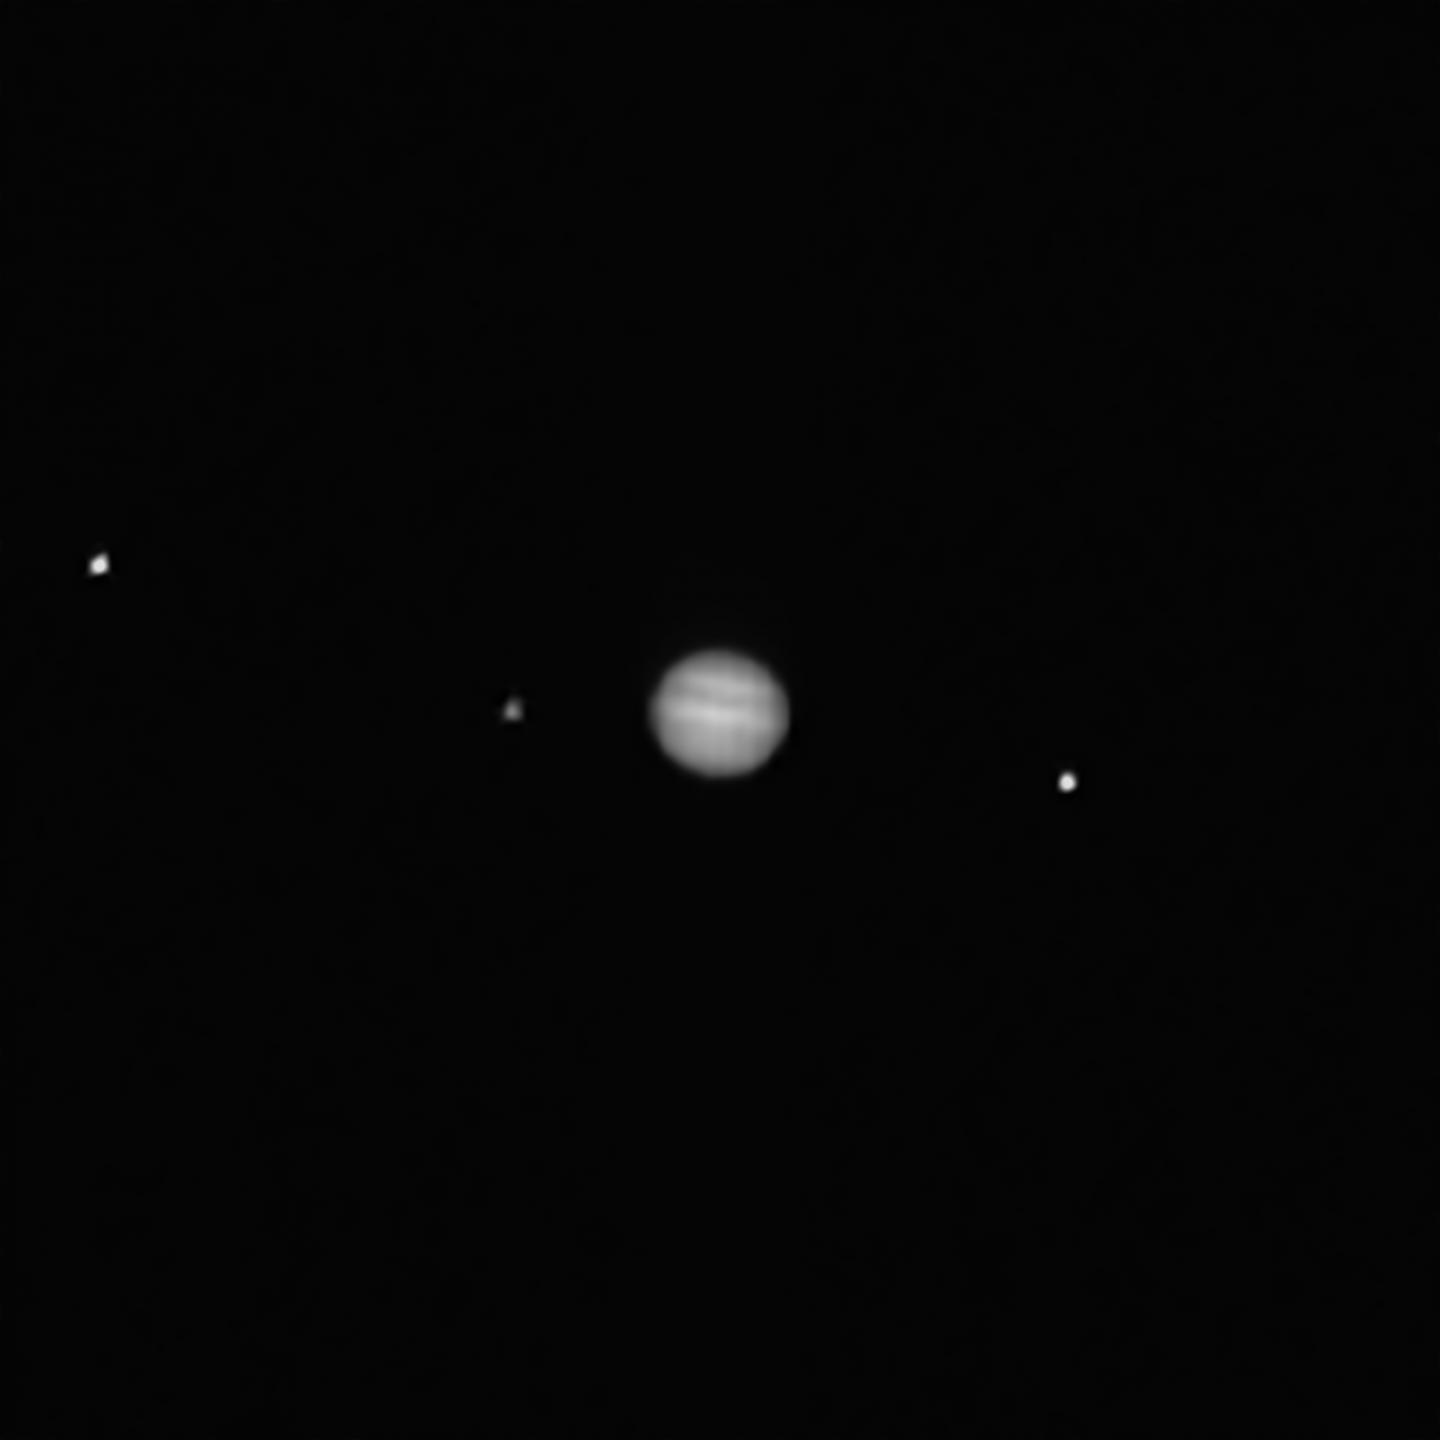 OSIRIS-REx Image of Jupiter and Moons